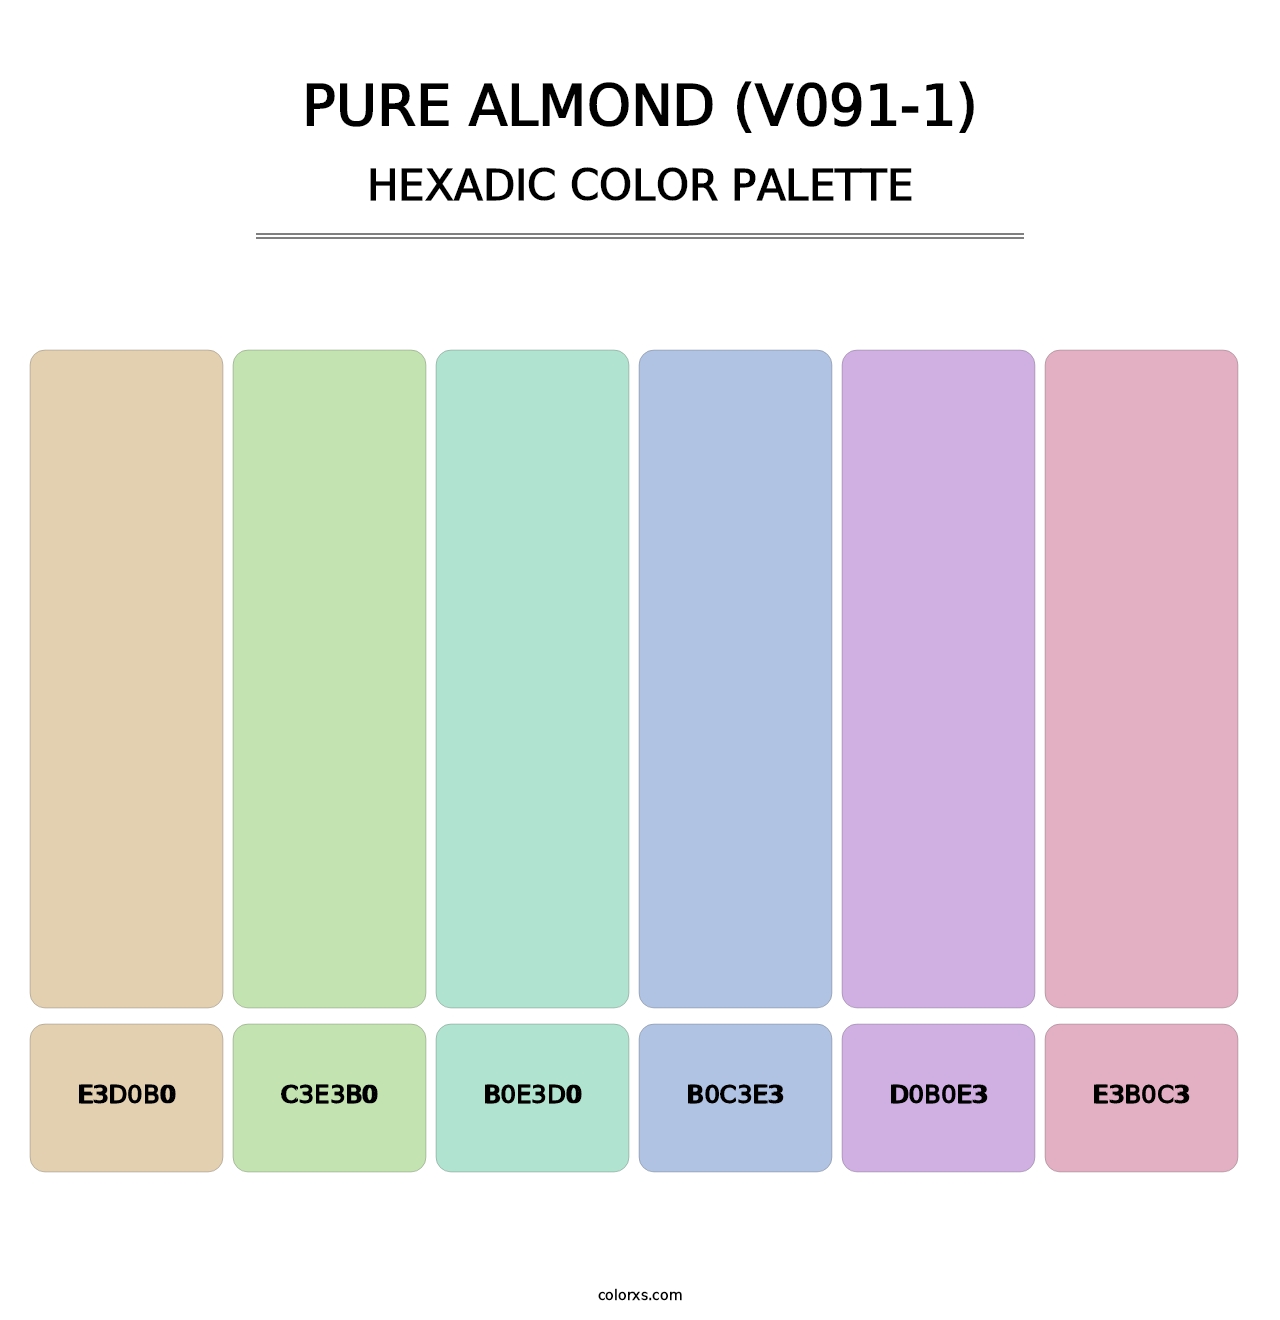 Pure Almond (V091-1) - Hexadic Color Palette